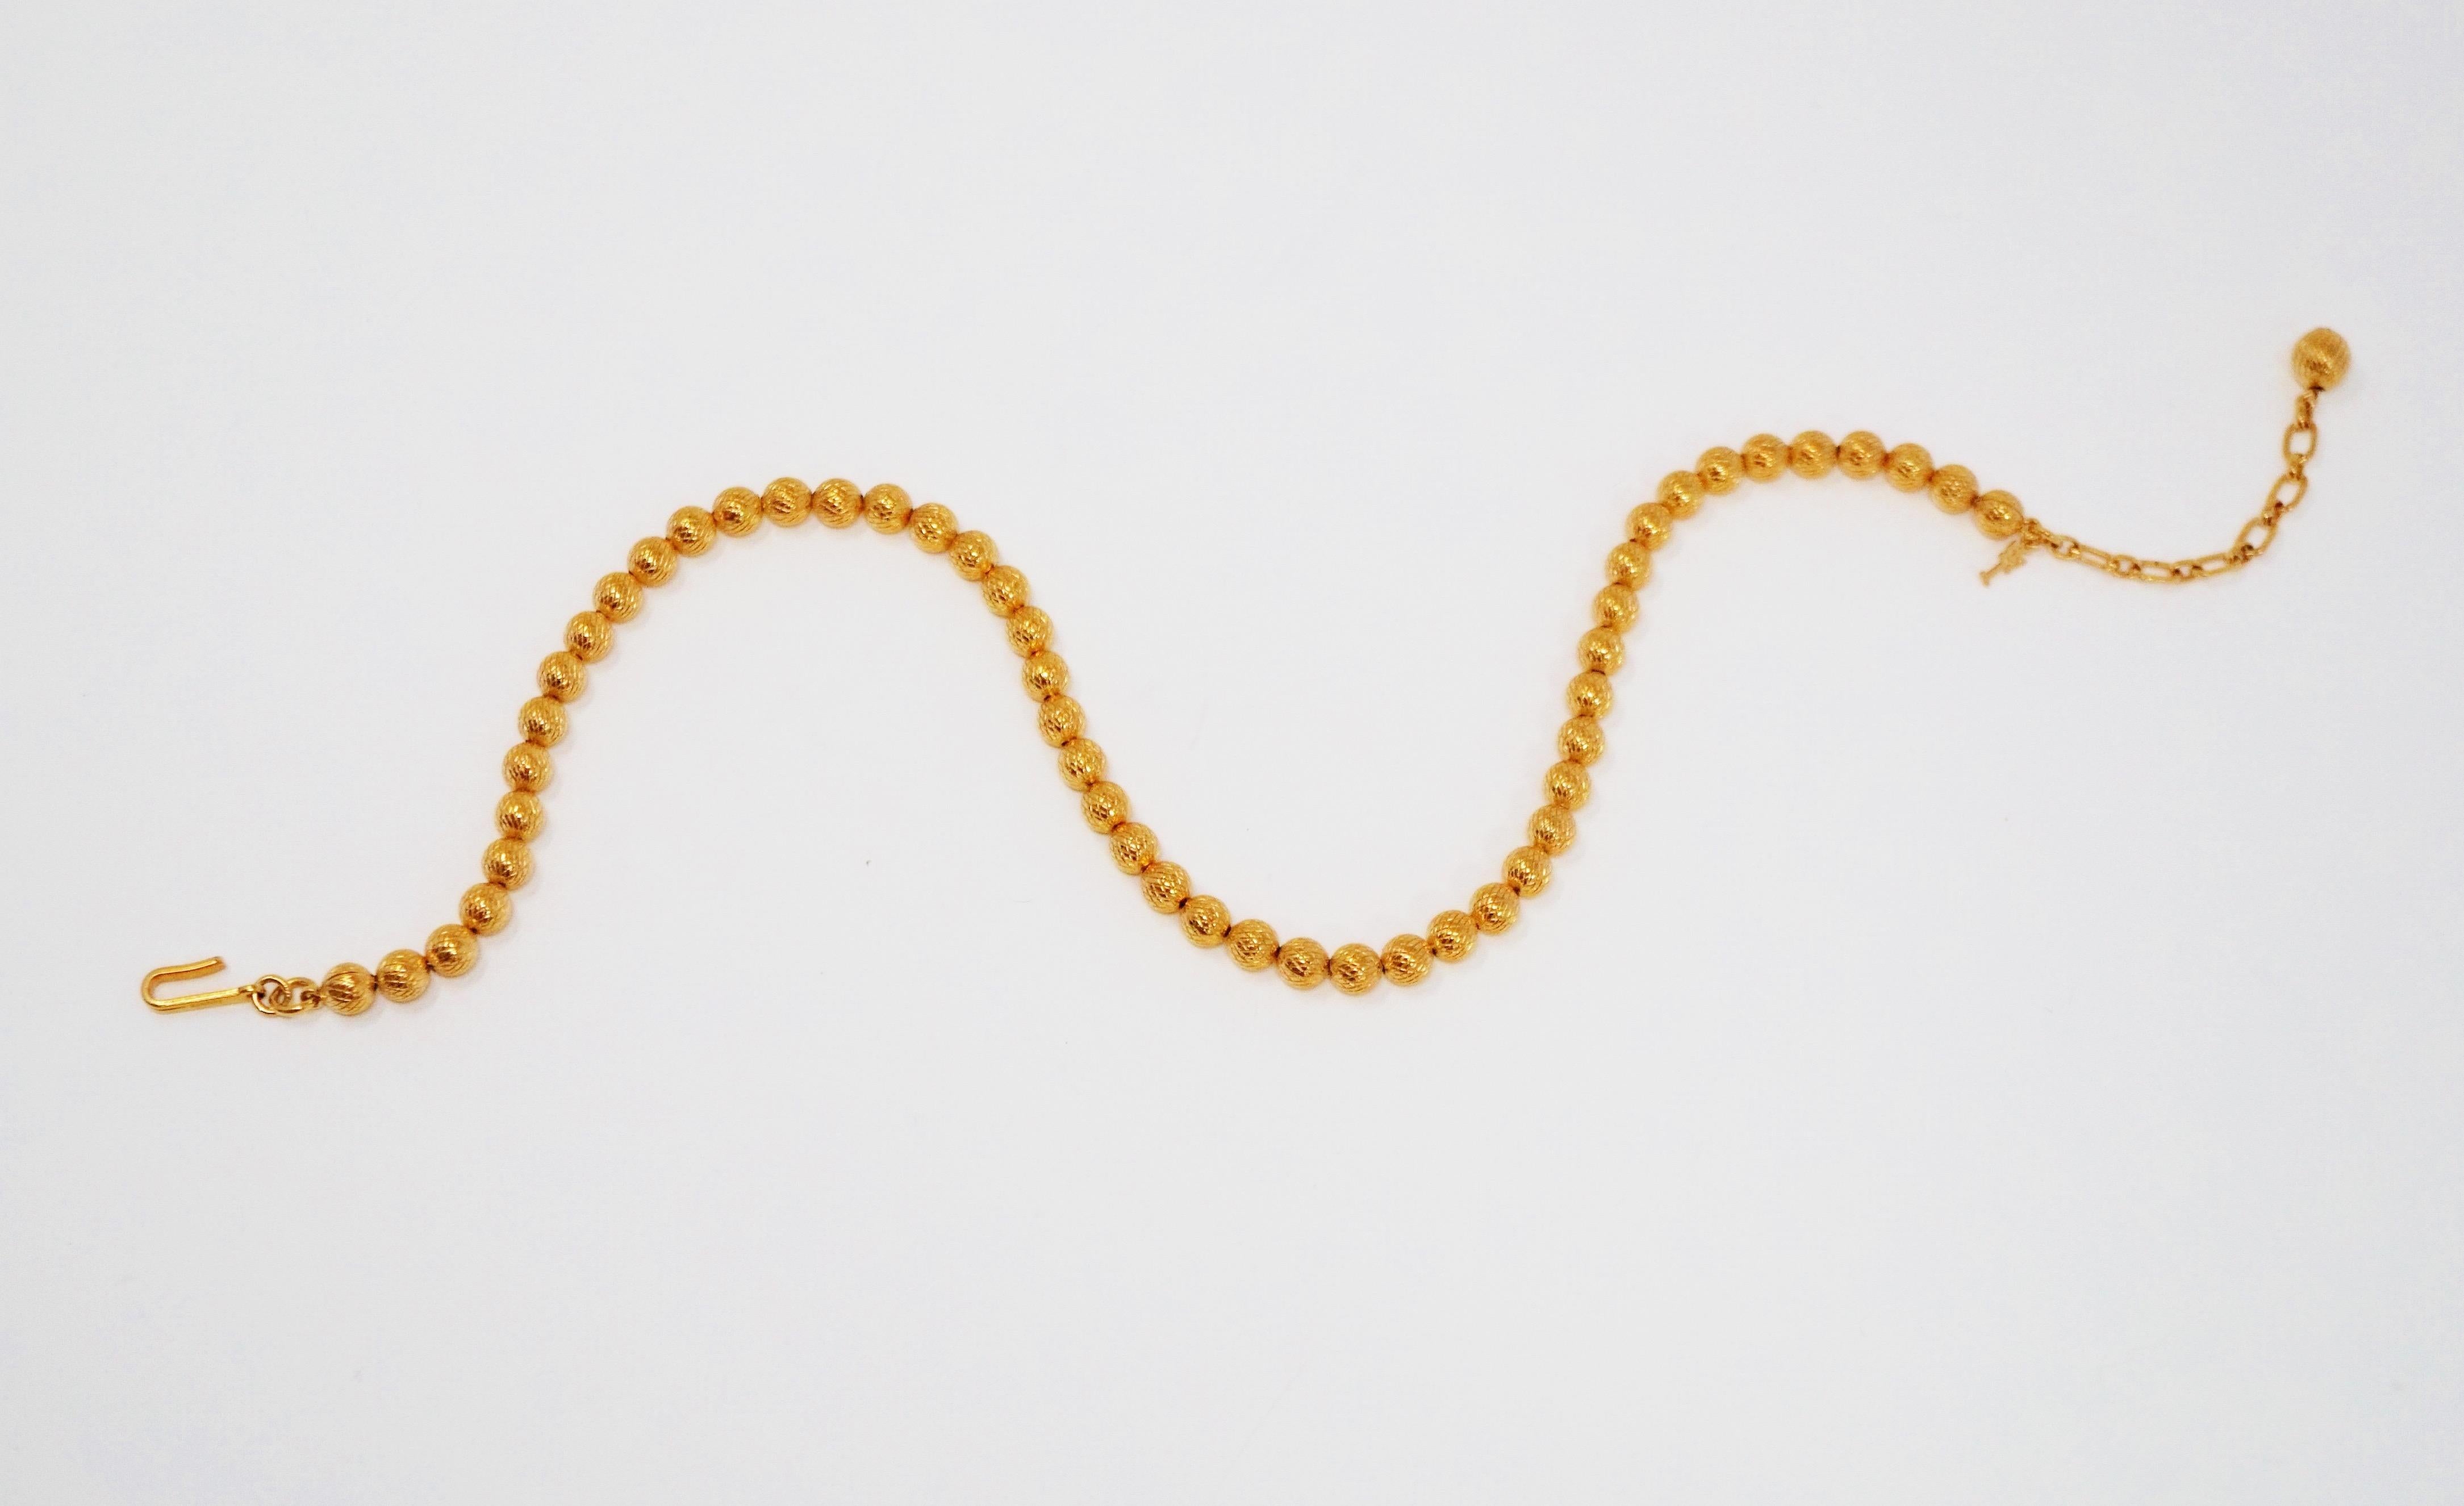 Modernist Crown Trifari Gold Bead Choker Necklace, circa 1955, Signed